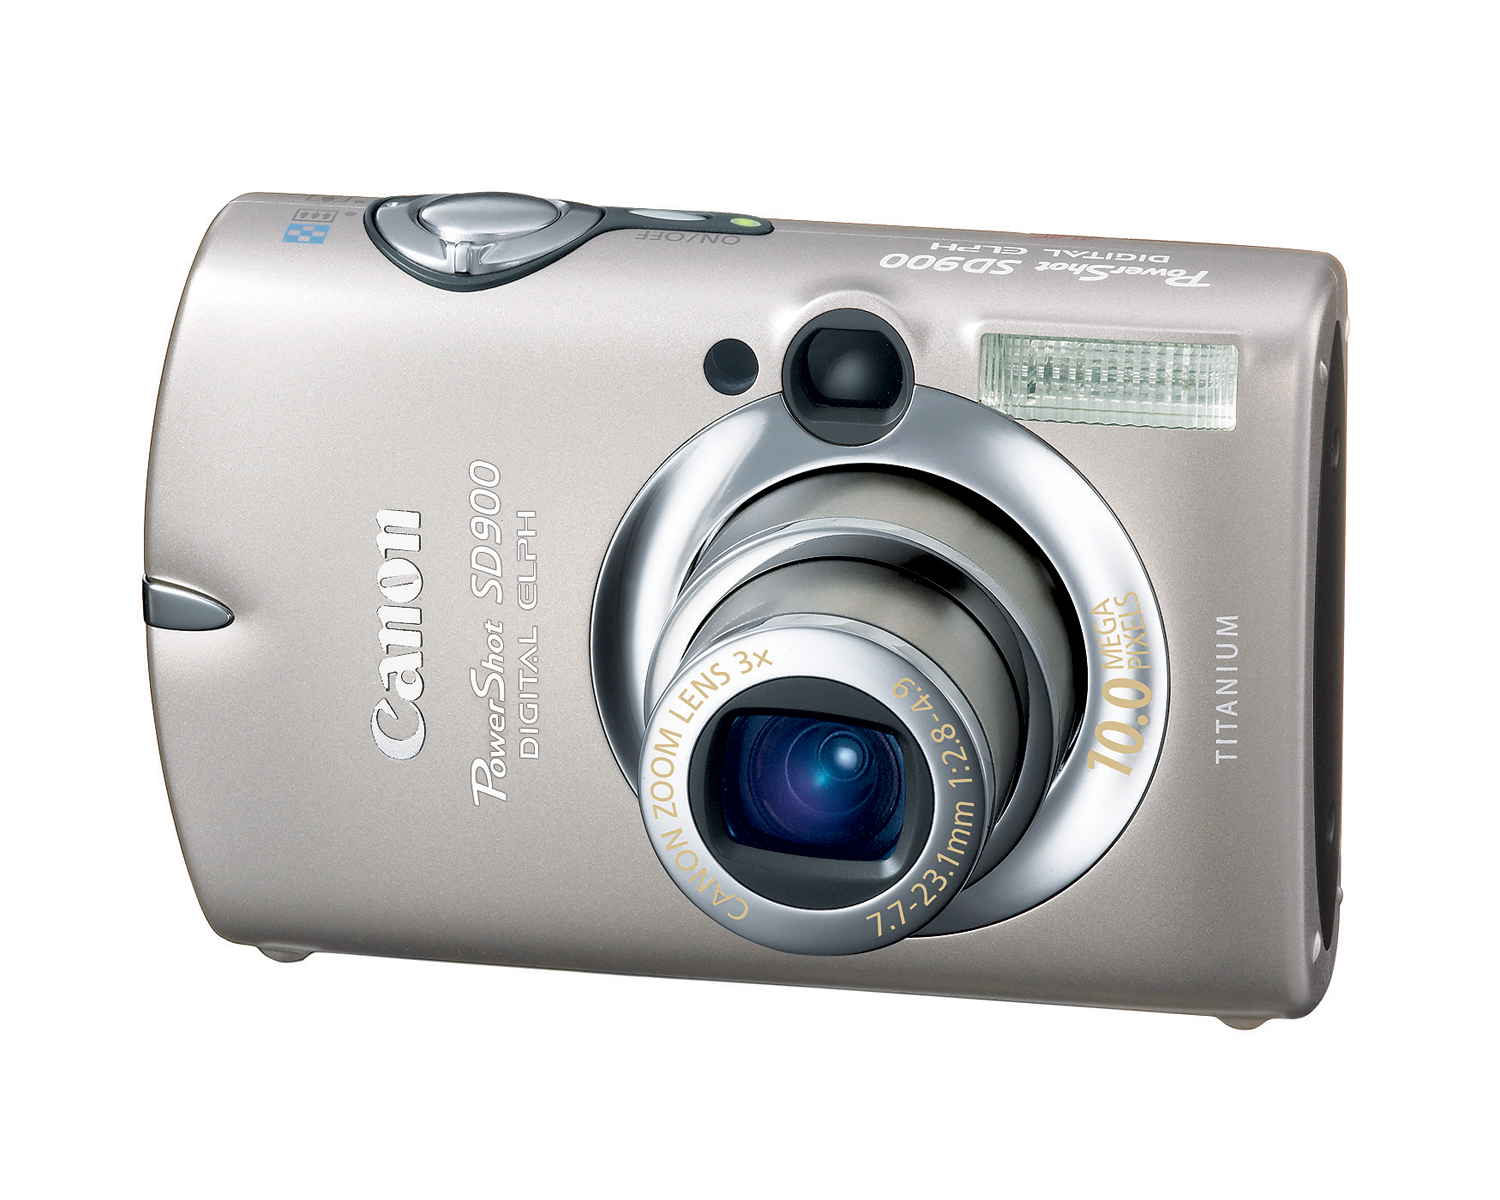 Canon Powershot SD900 Digital Camera